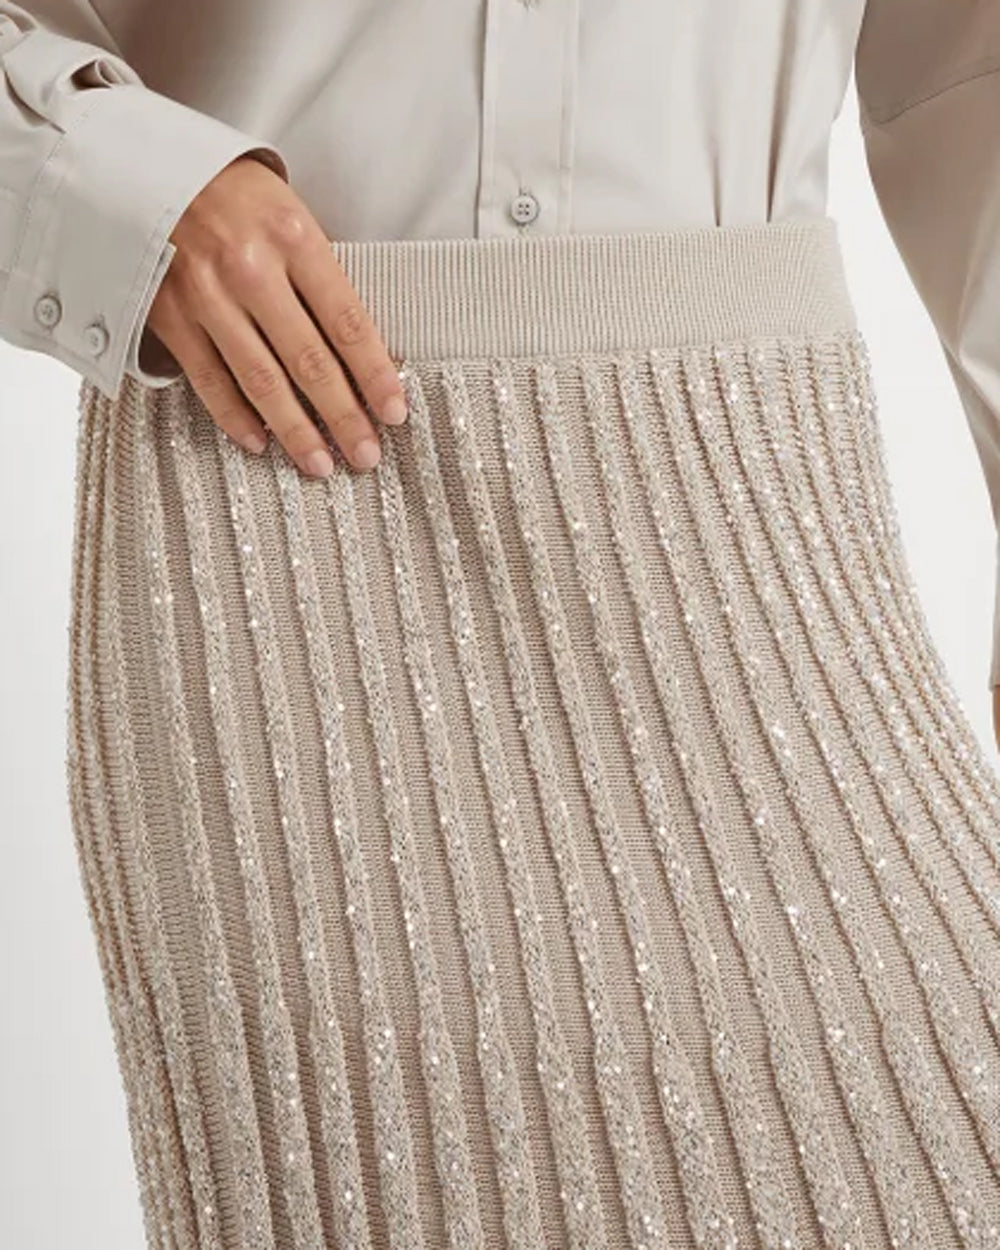 Marble Knit Paillette Midi Skirt